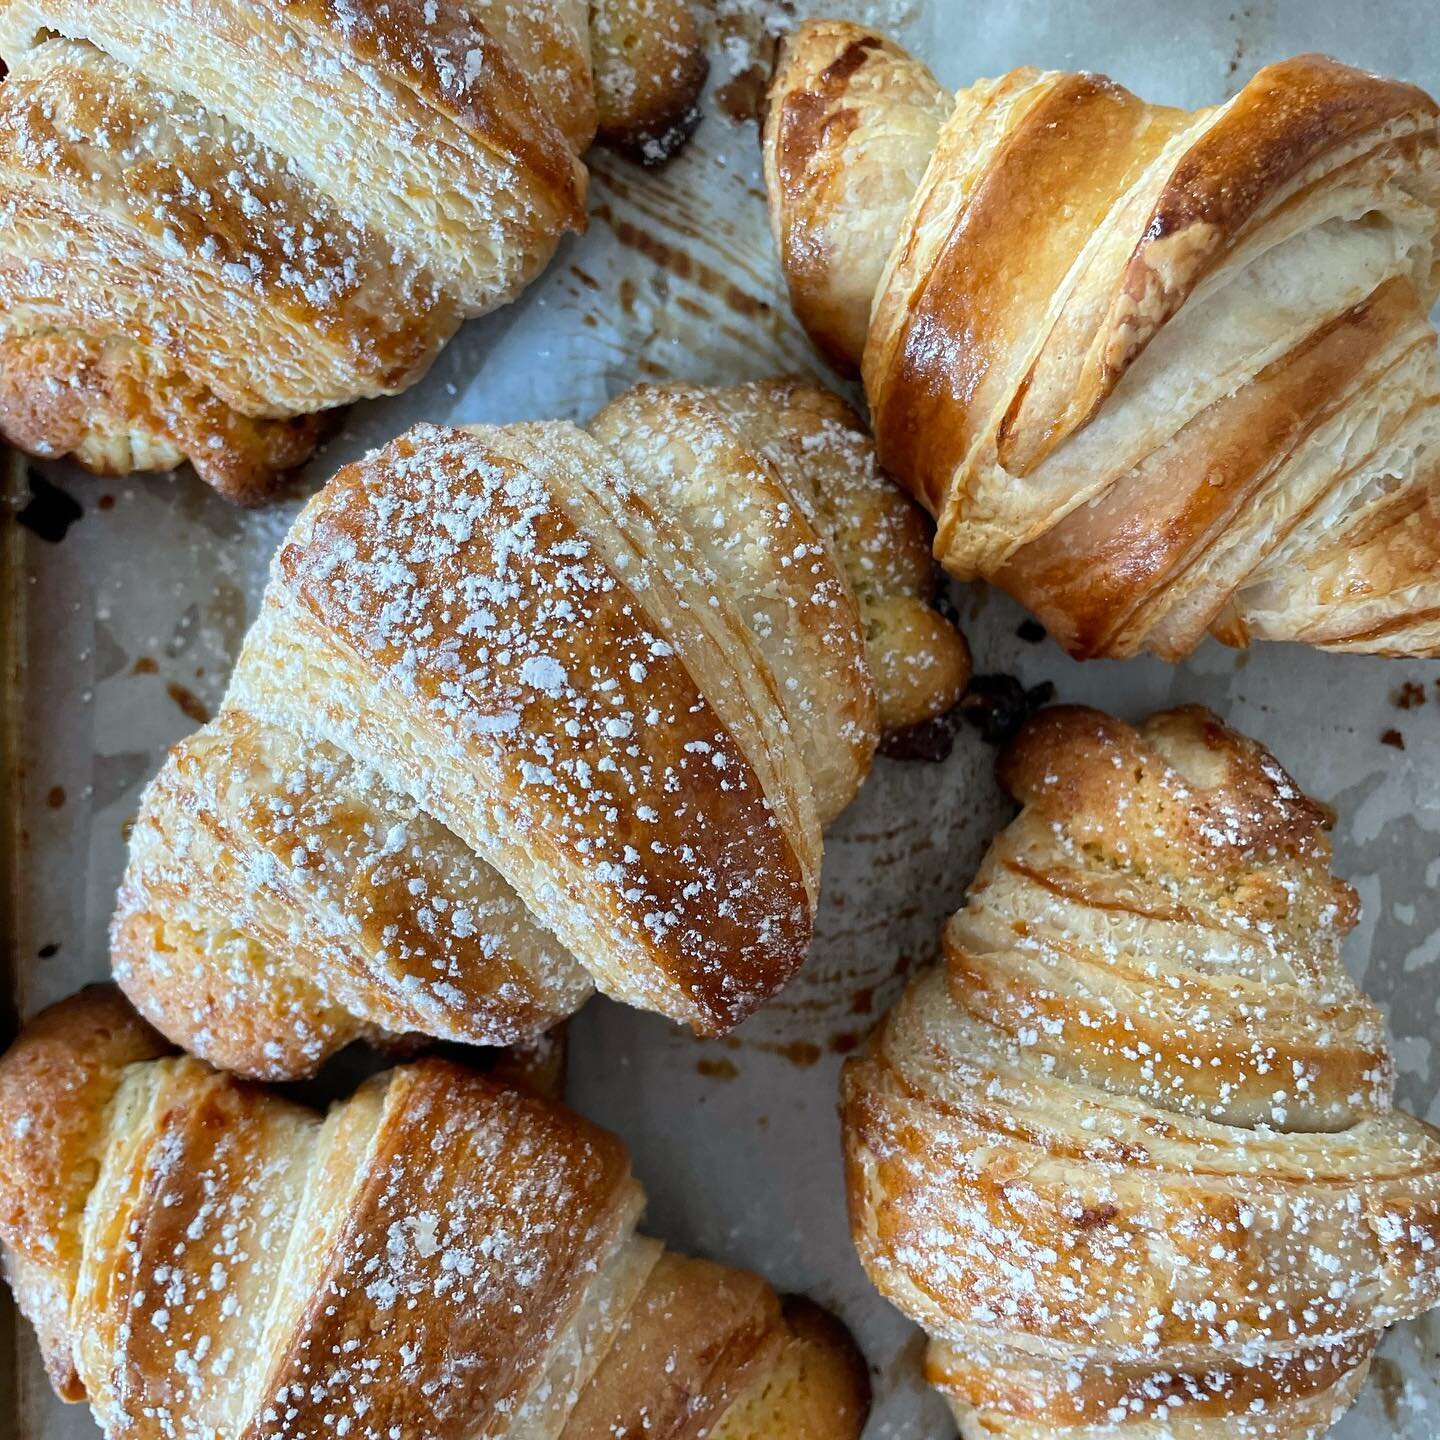 Working a little #viennoiserie magic this morning with almond croissants 🥐 

#croissant #almond #nomnomnom #yummy #bread #breadofinstagram #breadporn #breadmaking #breadlover #breadbaking #croissants #croissantlover #croissant🥐